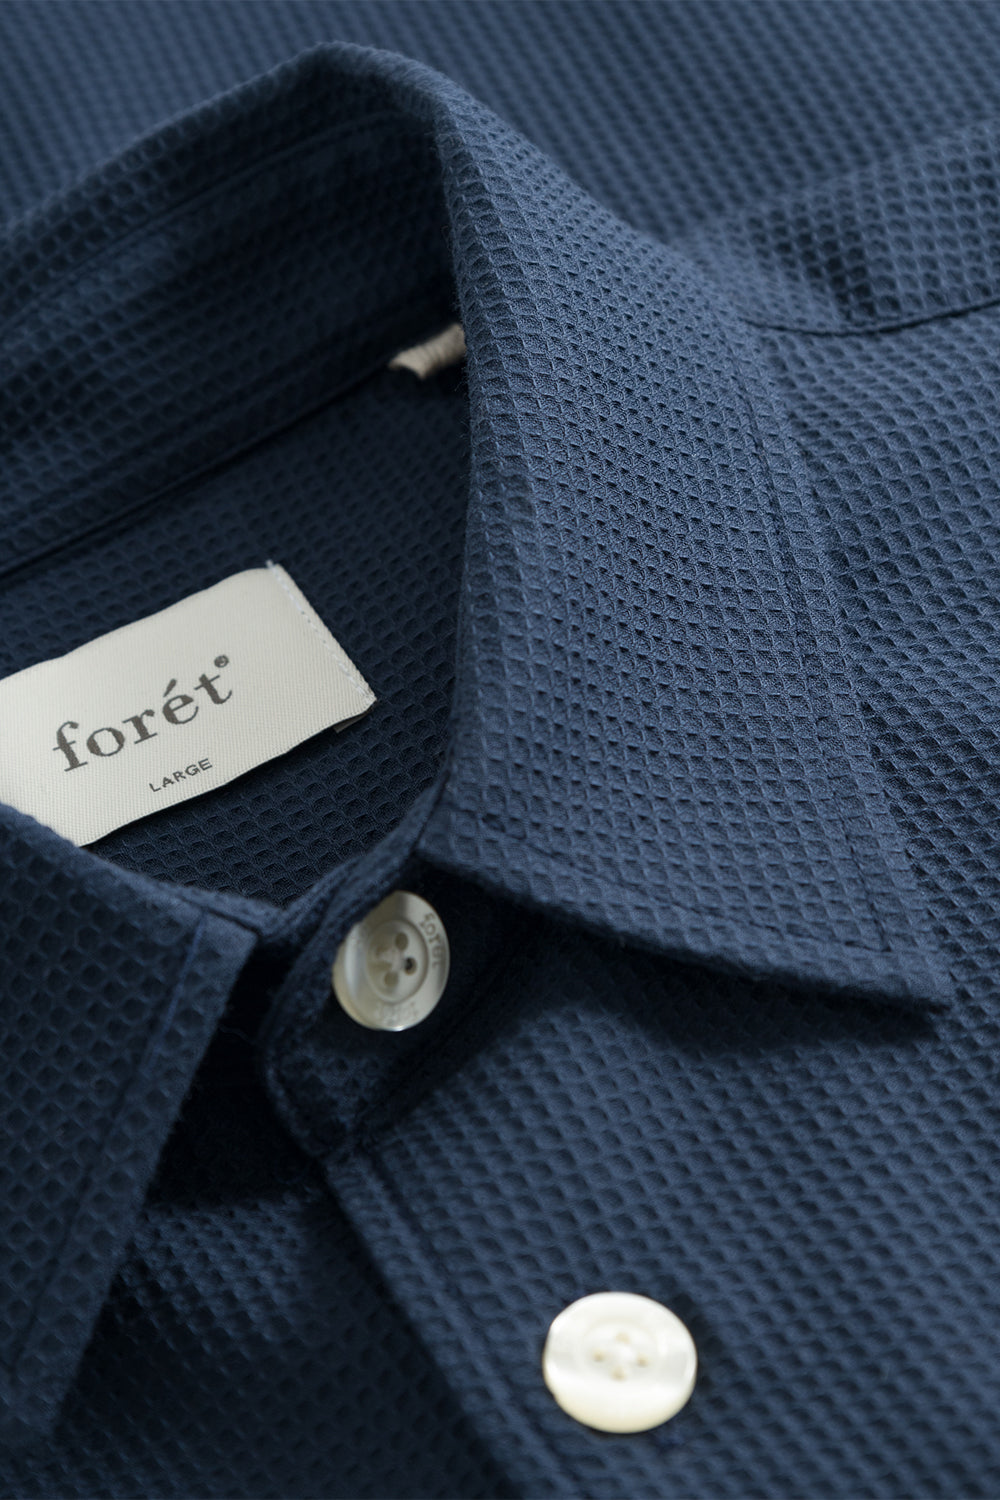 Mens Shirt | Foret Pantera shirt | The Standard Store